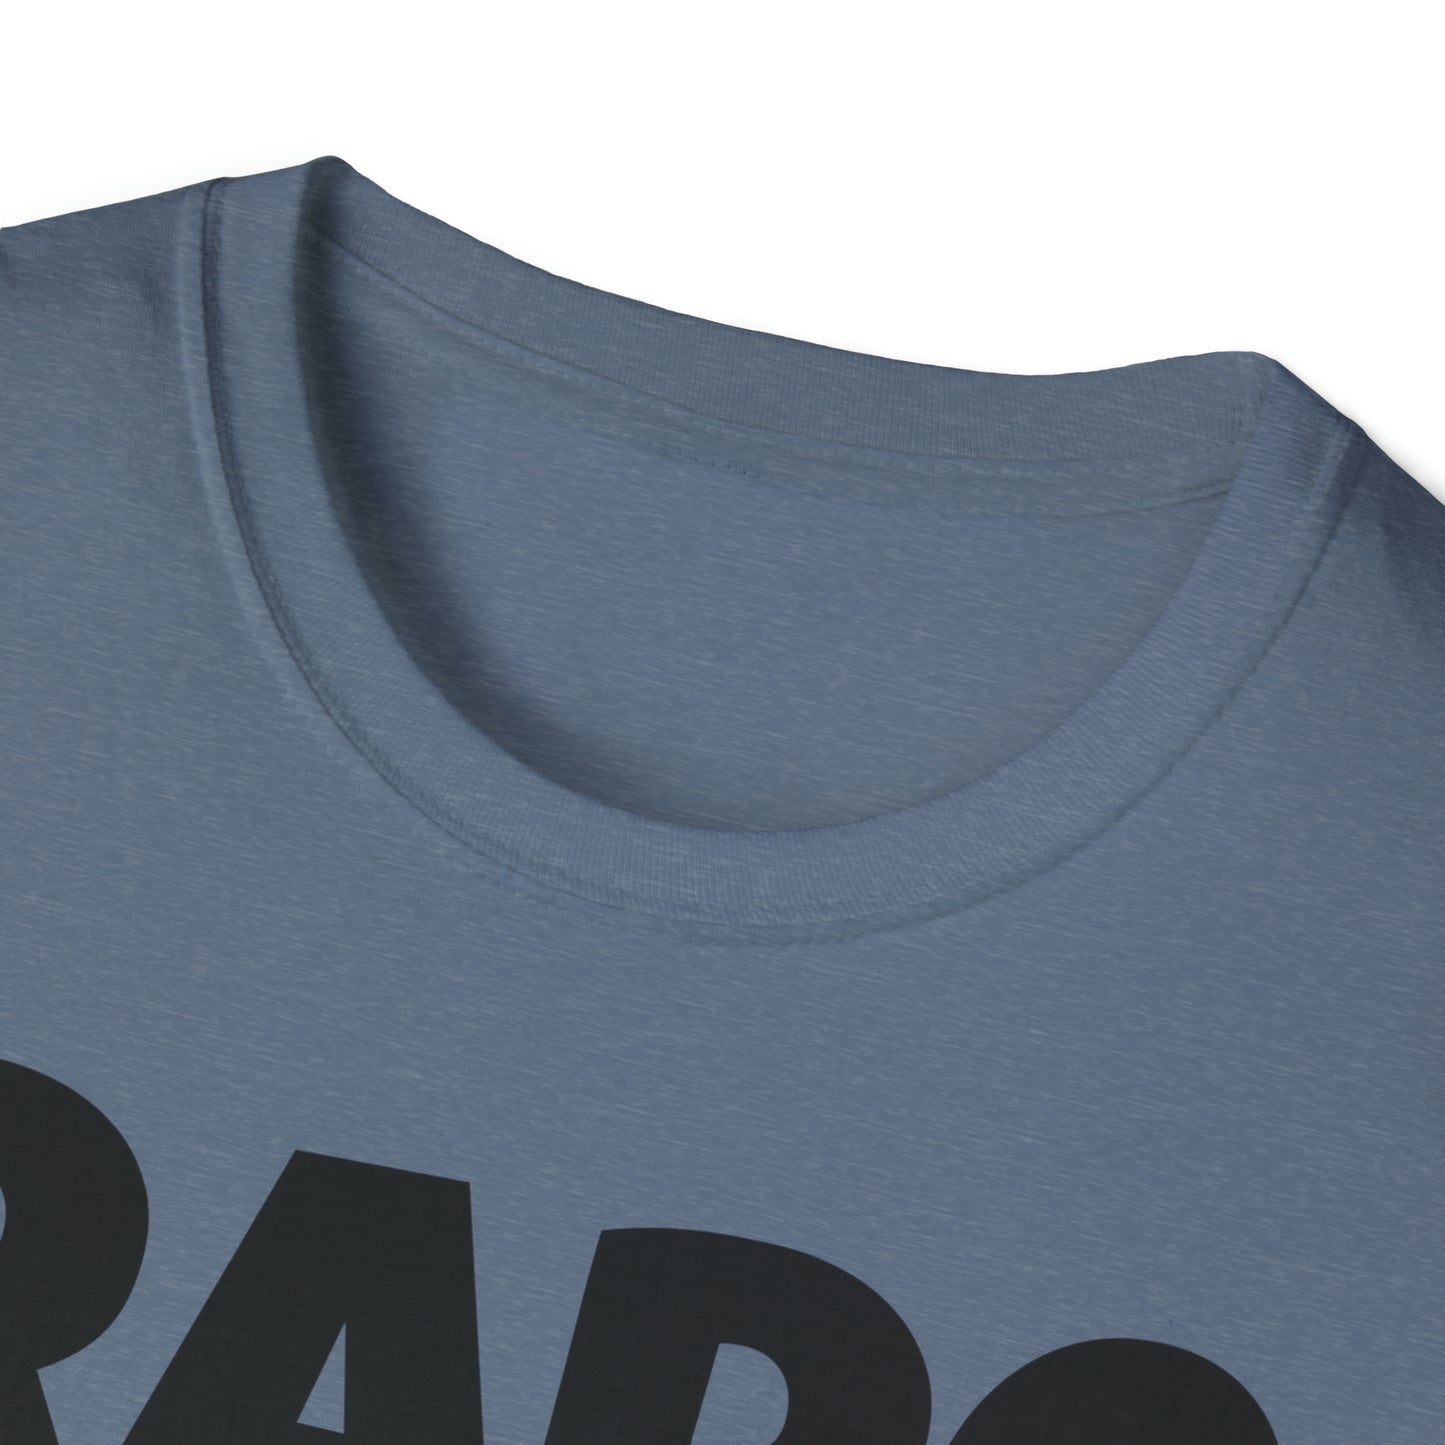 Rare NFs-W Unisex Softstyle T-Shirt